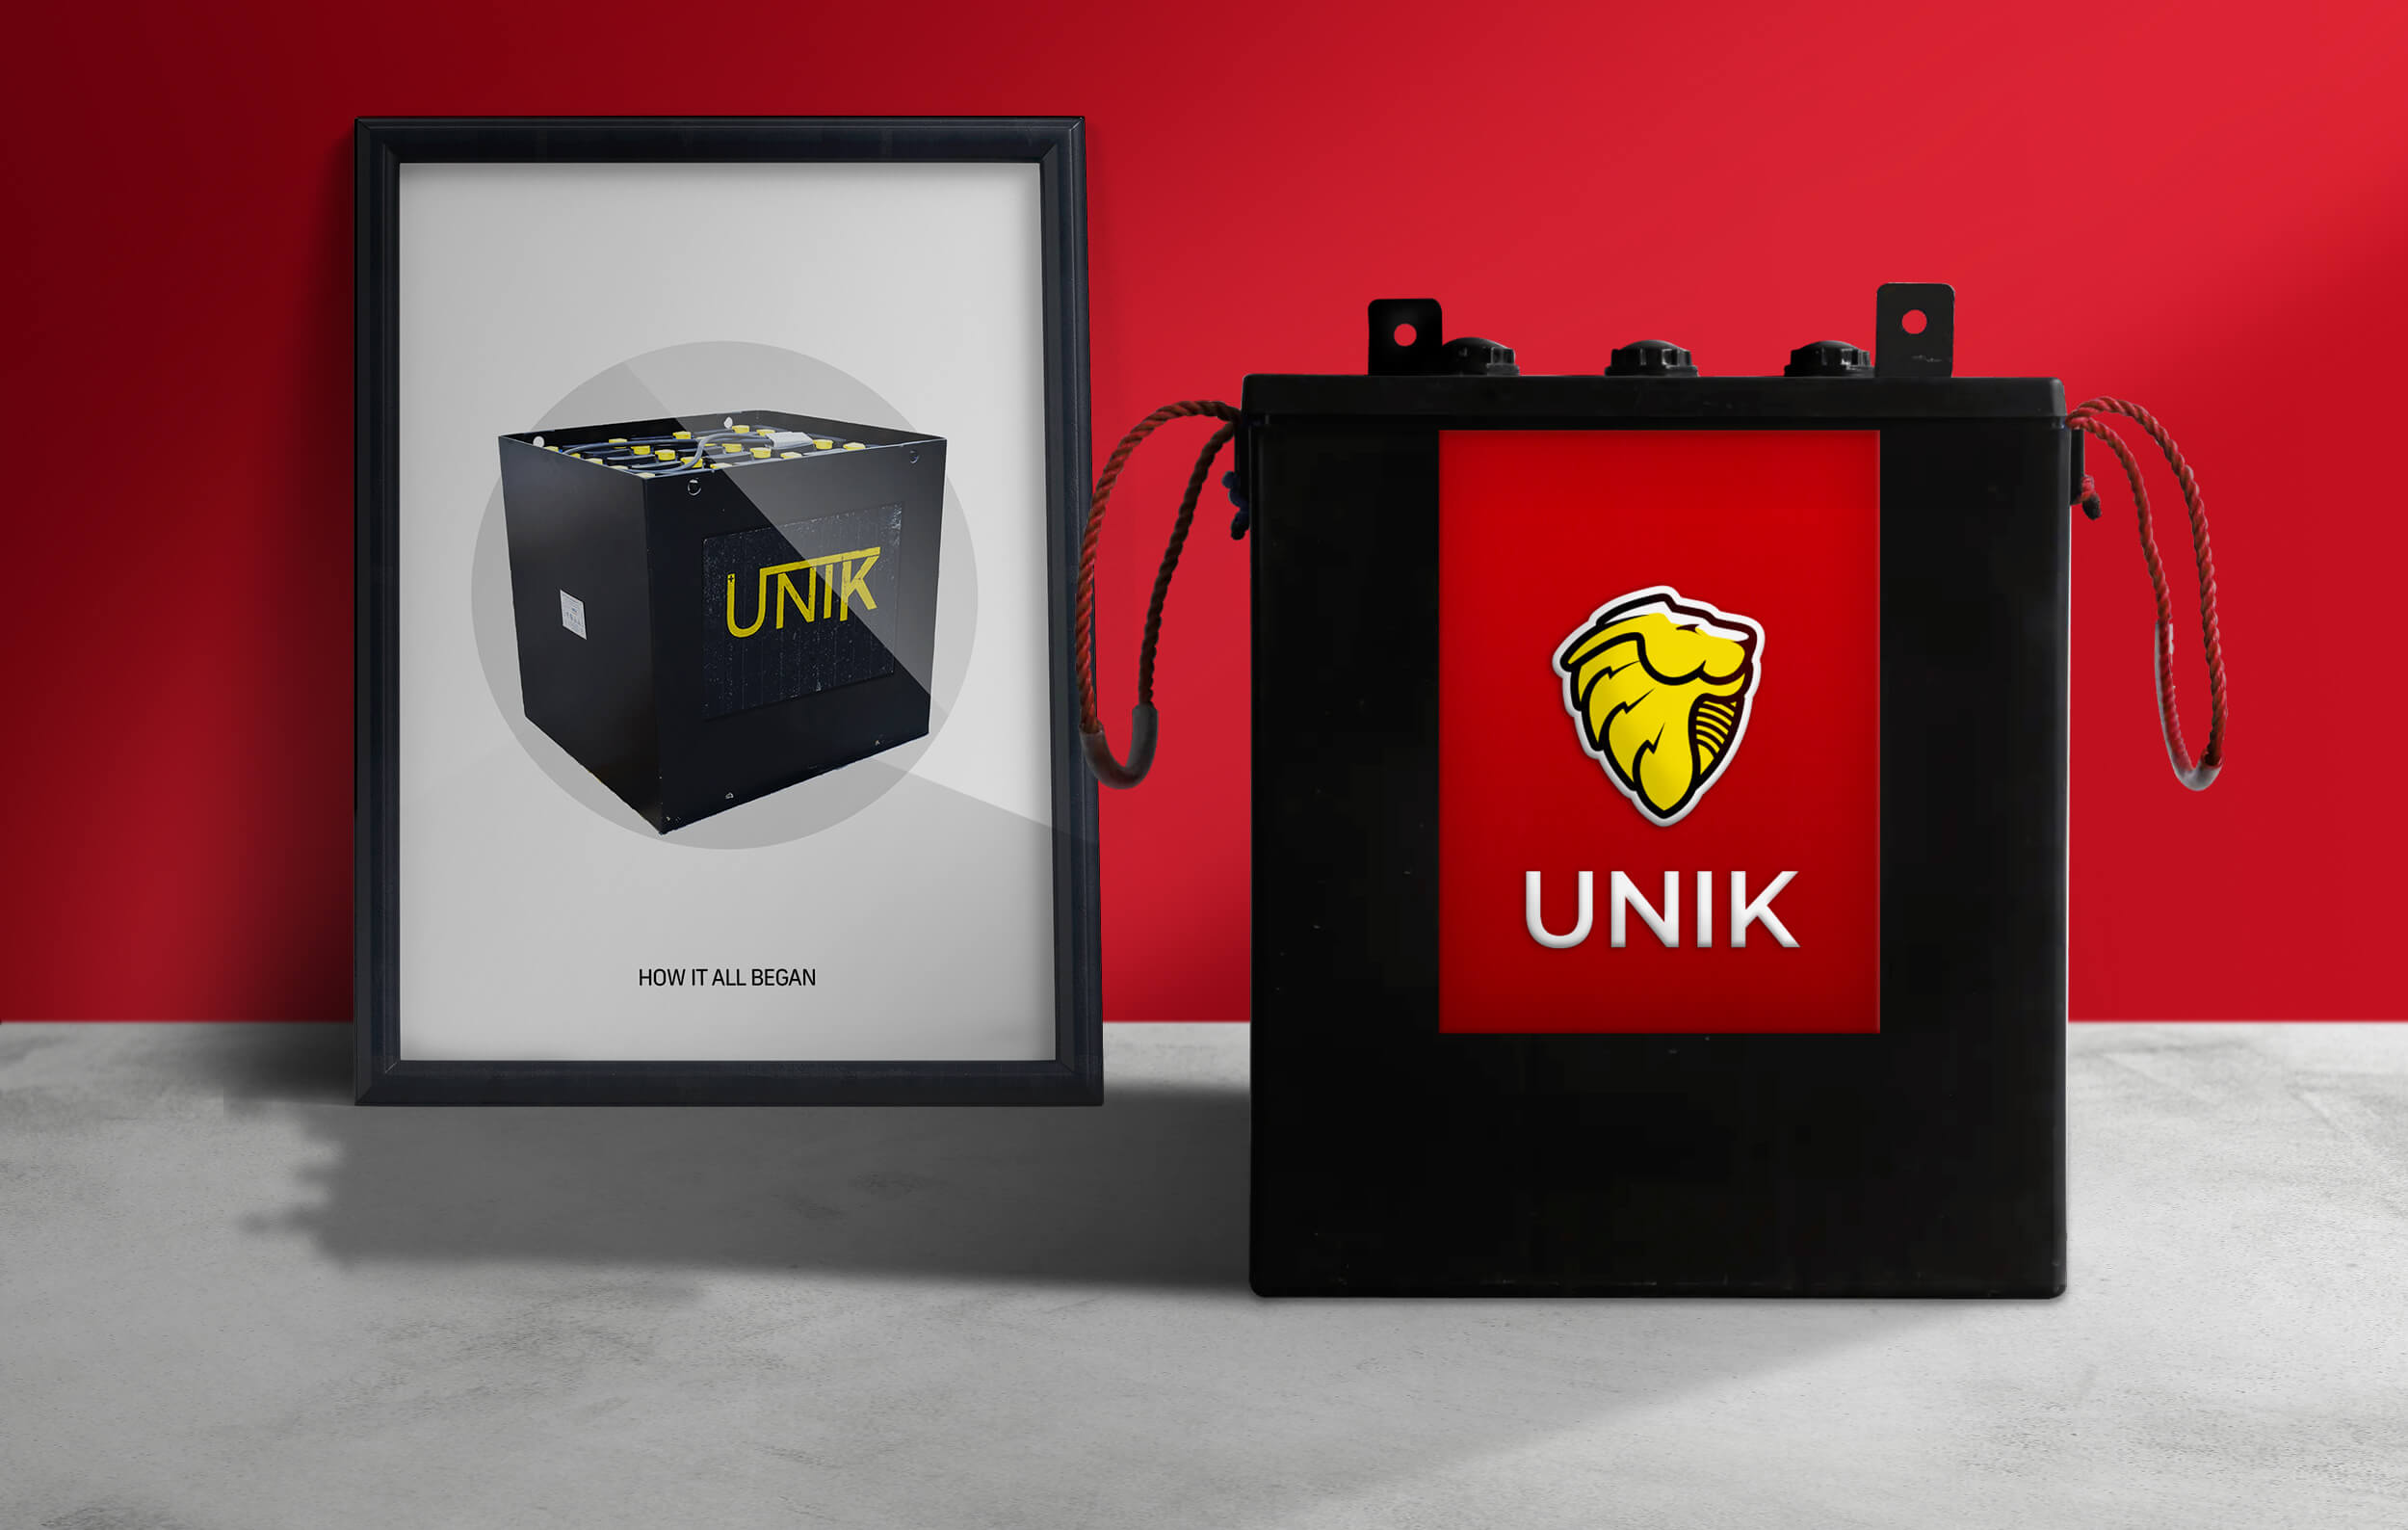 Unik-Automation-brand-logo-identity-packaging-design-comparison-with-old-logo-by-Artisticodopeo-Designz-(6).jpg Image